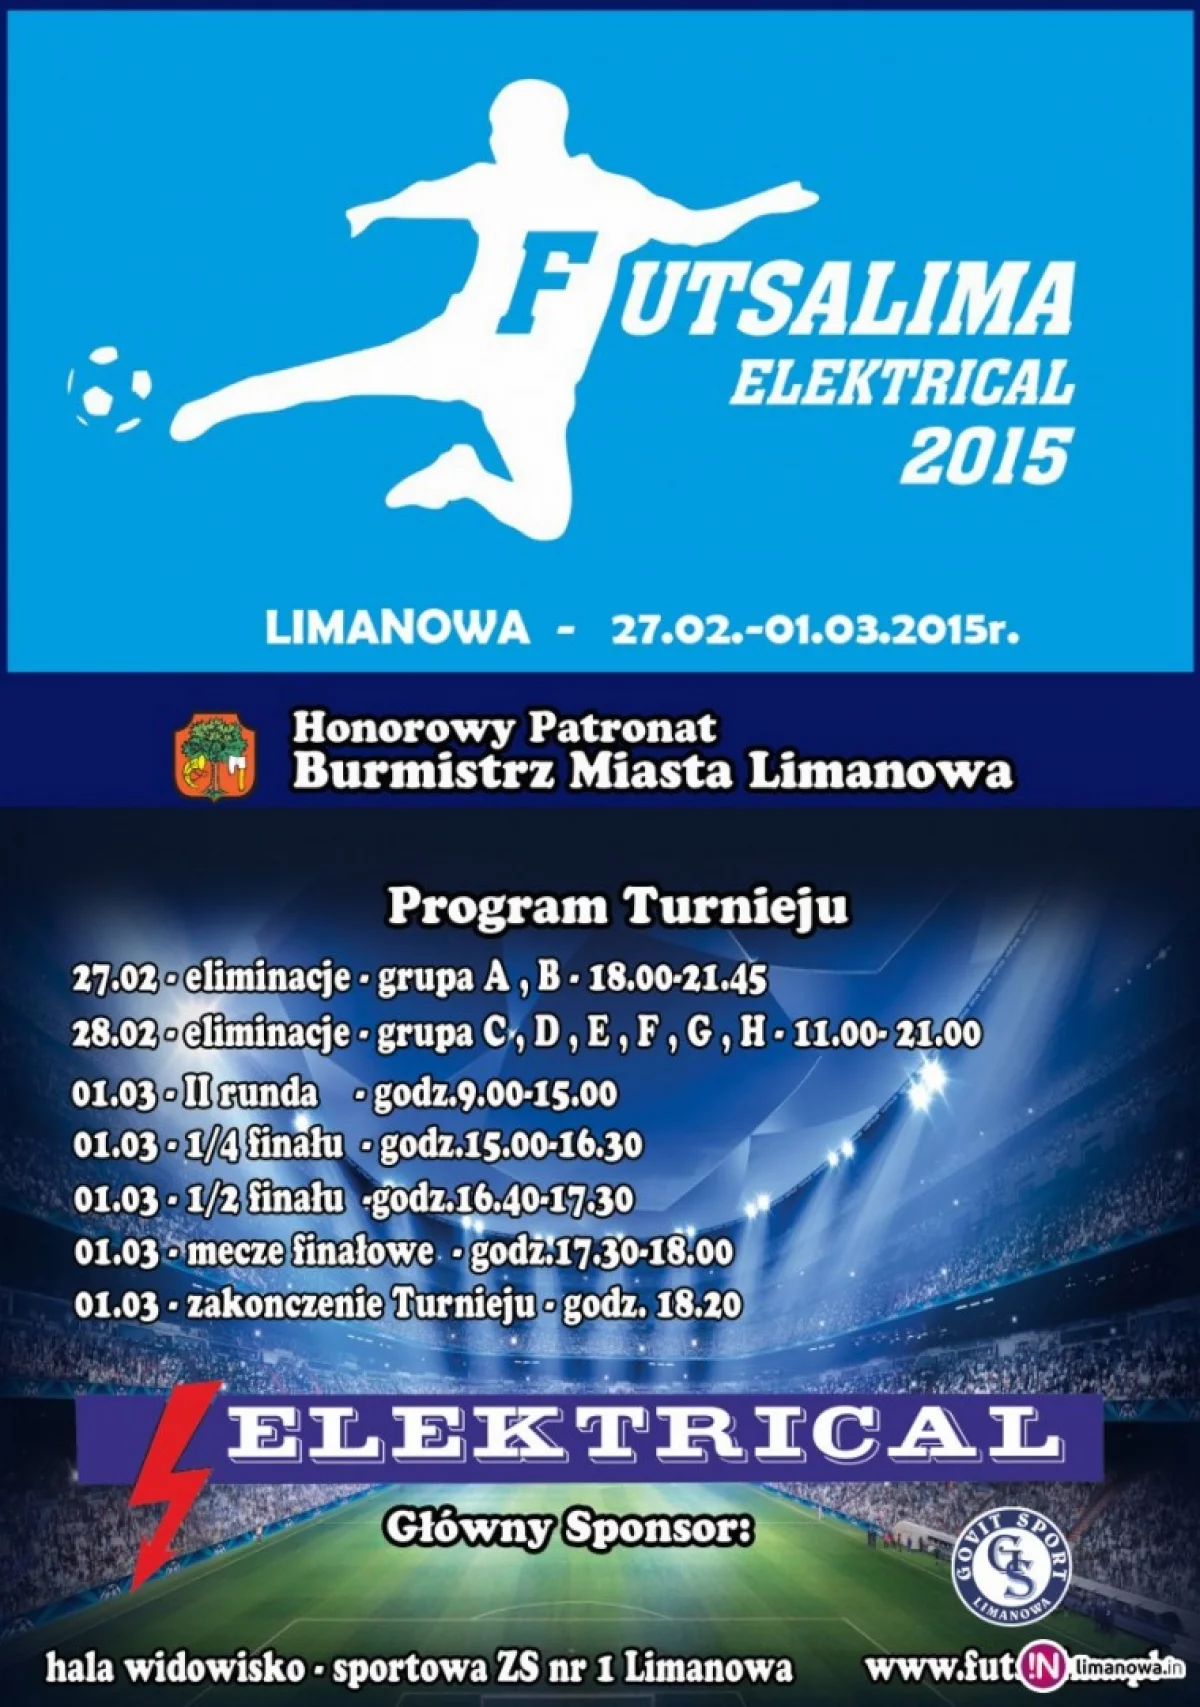 Futsalima Elektrical 2015